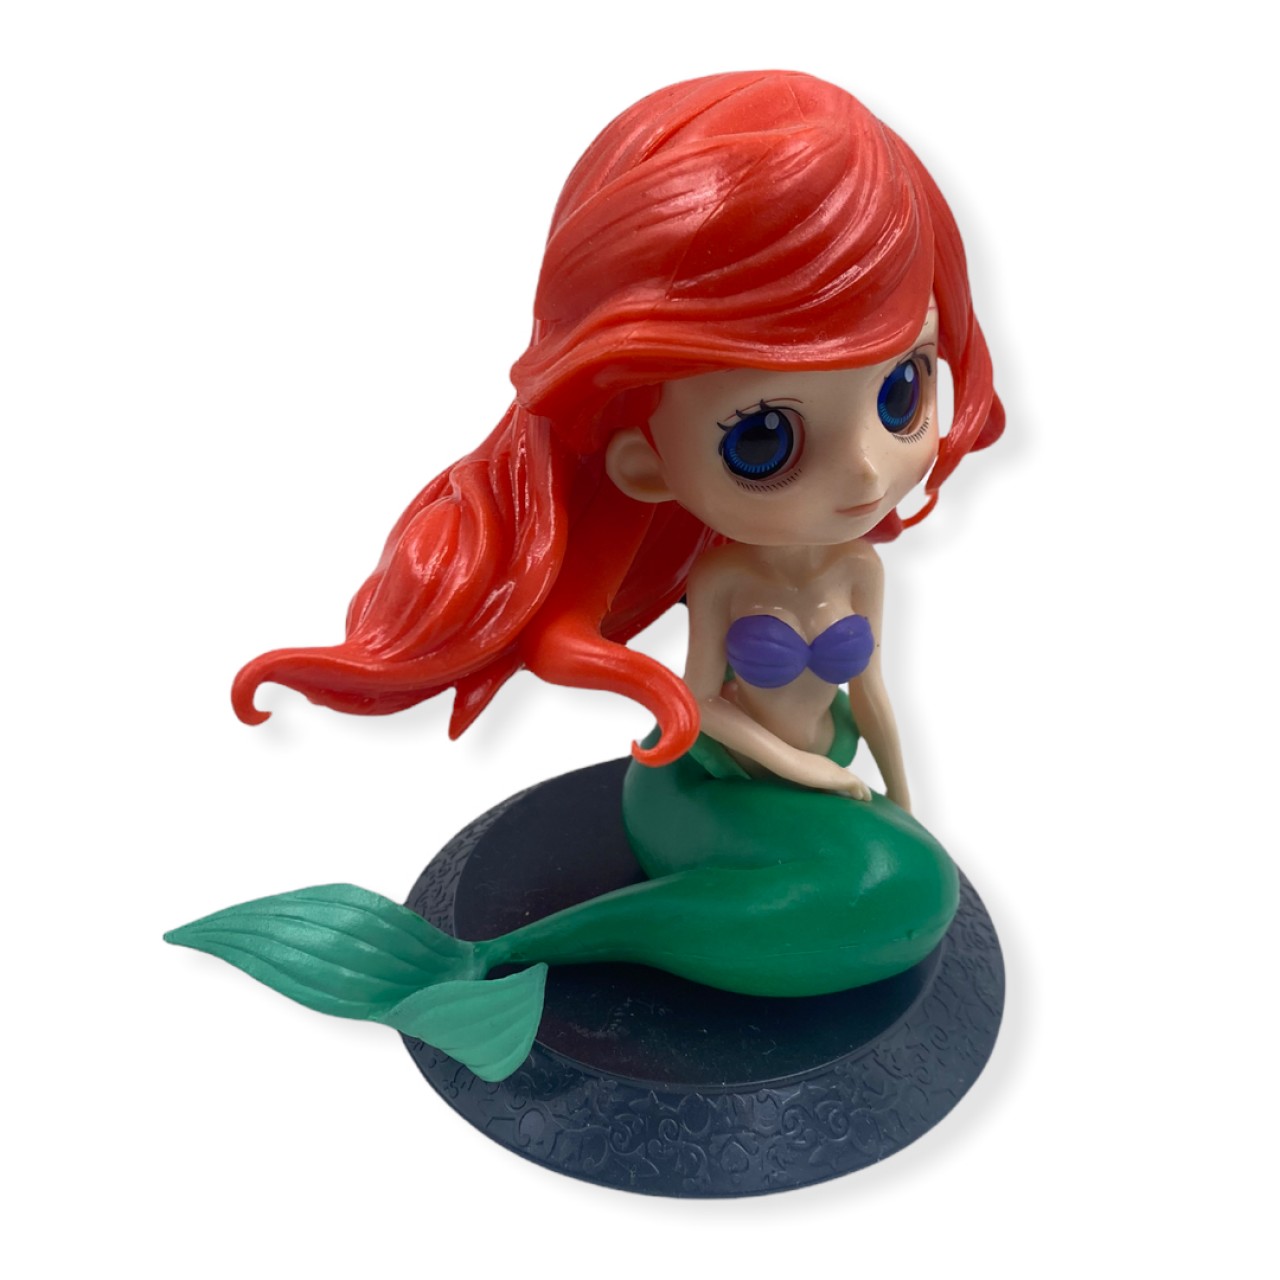 Little Mermaid Decorative Action Figure